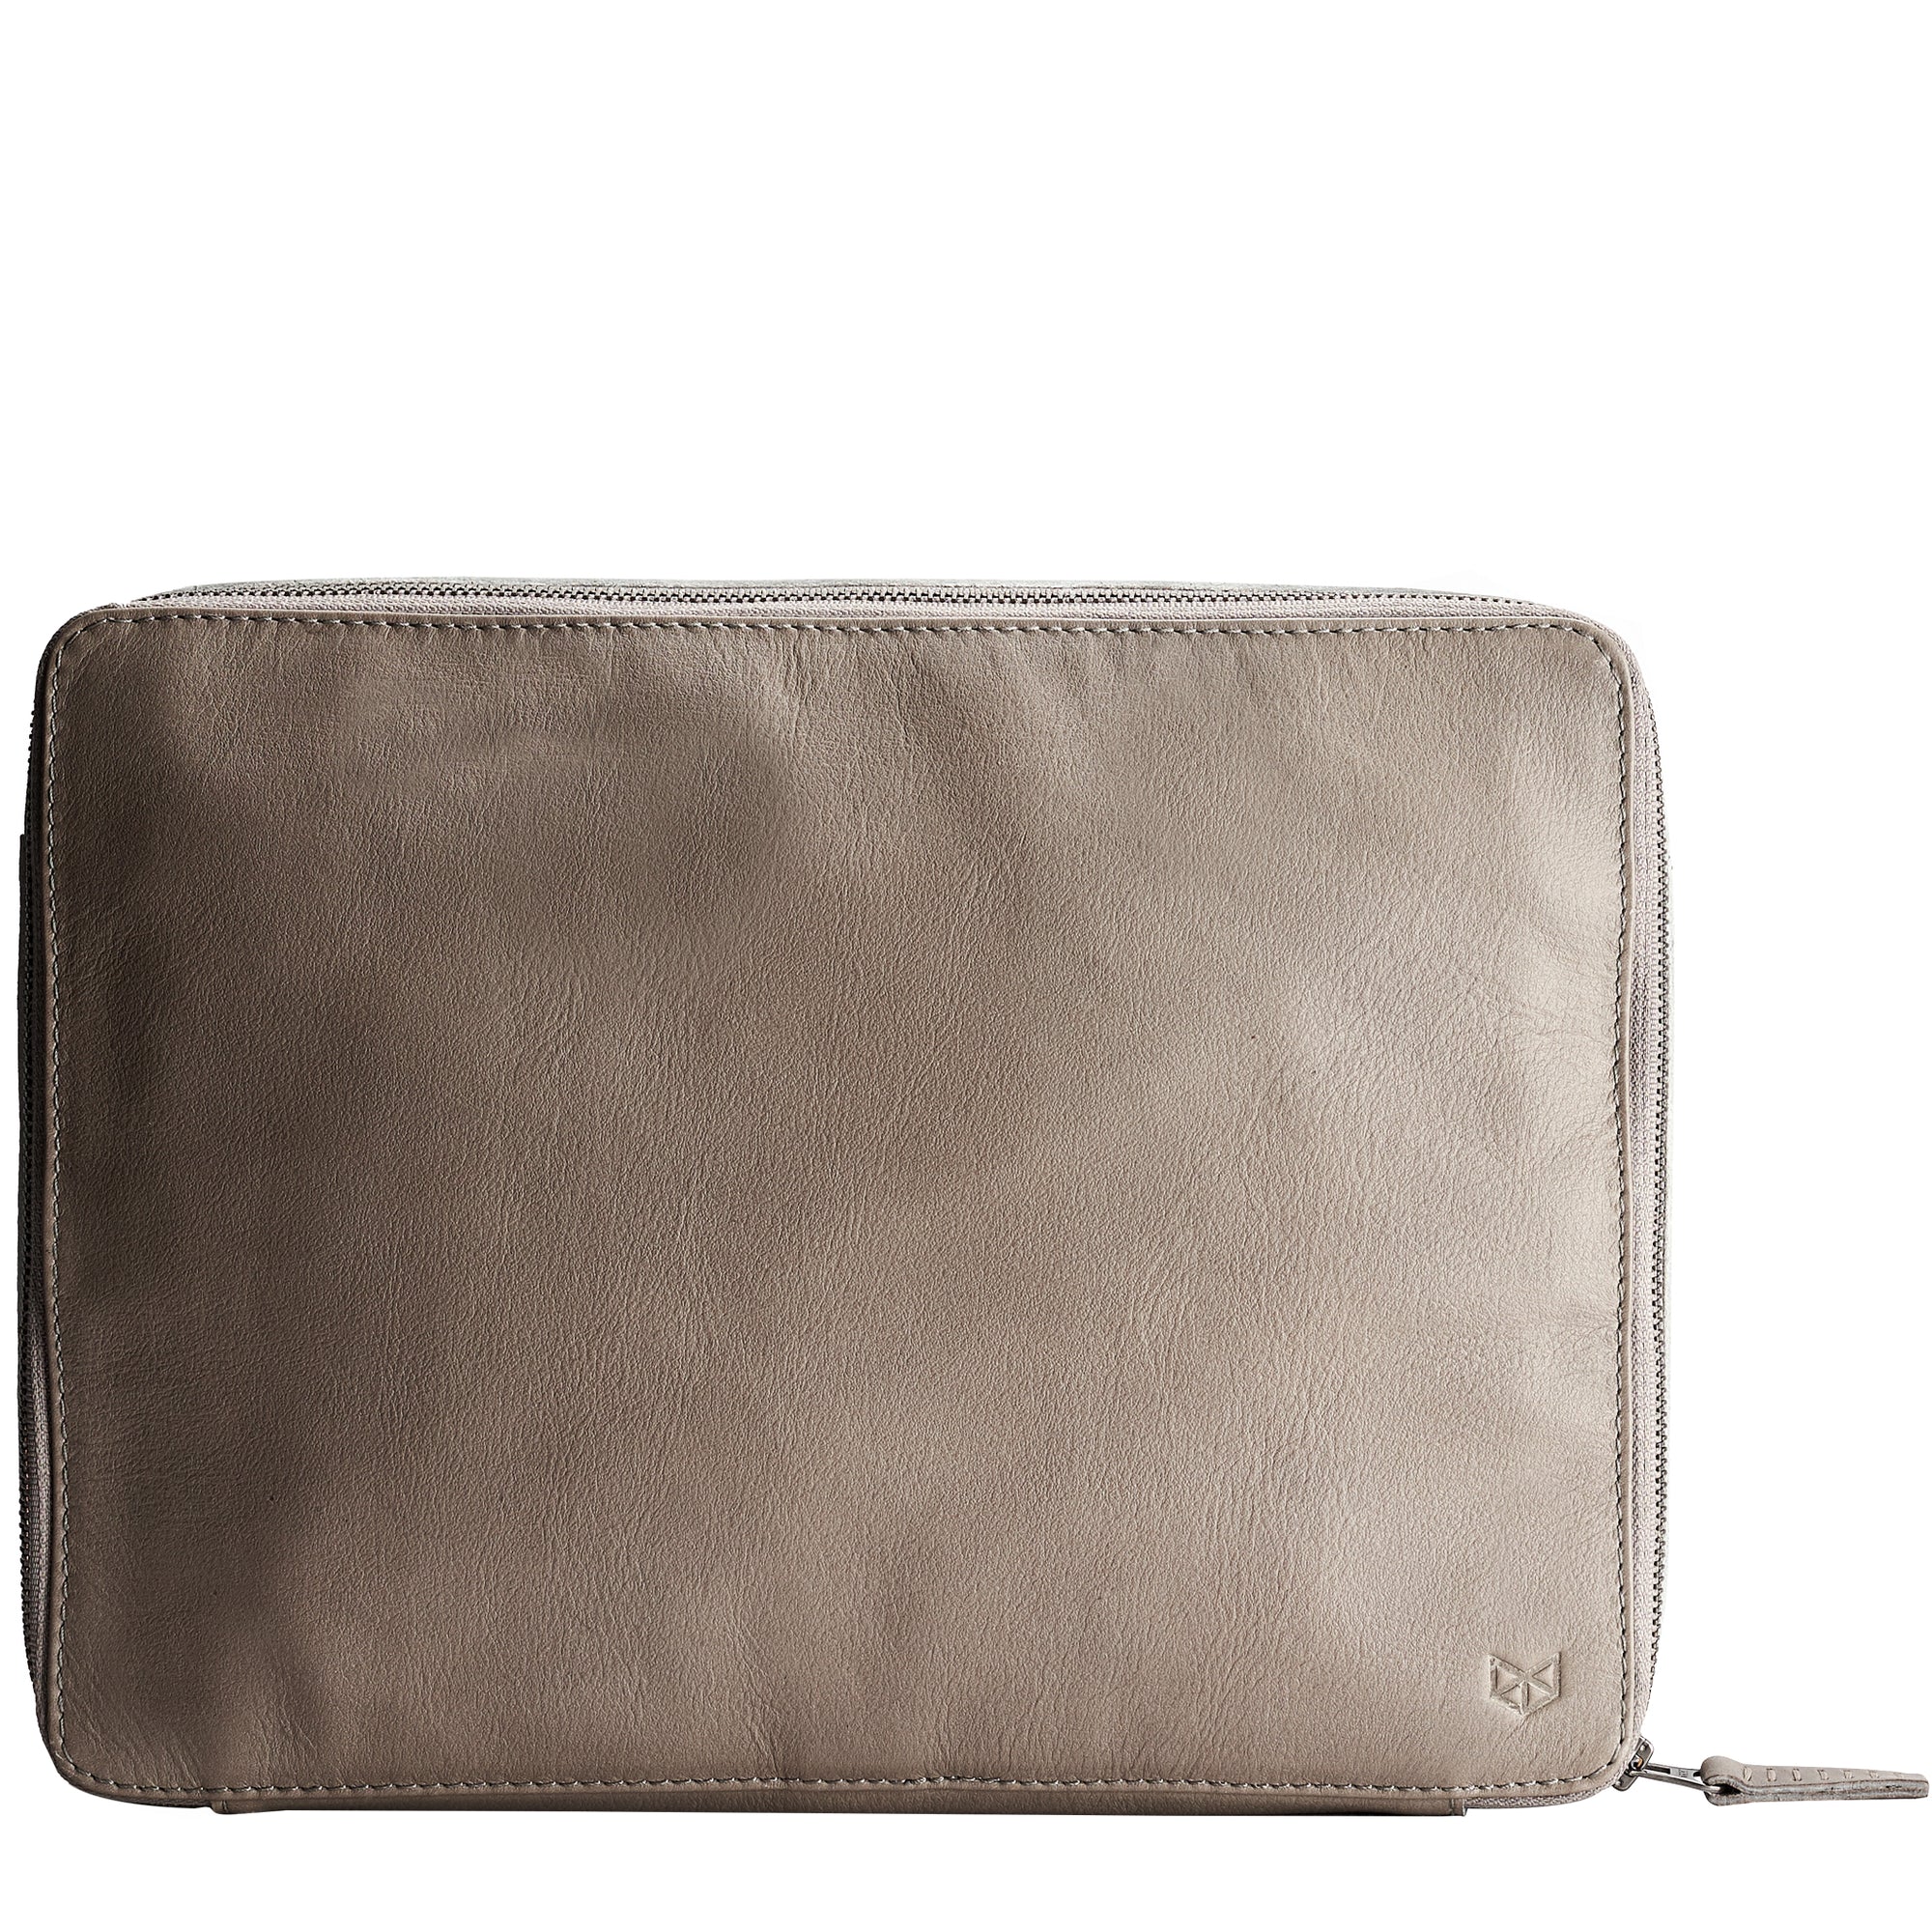 Best tech travel bag. Grey gear pouch by Capra Leather